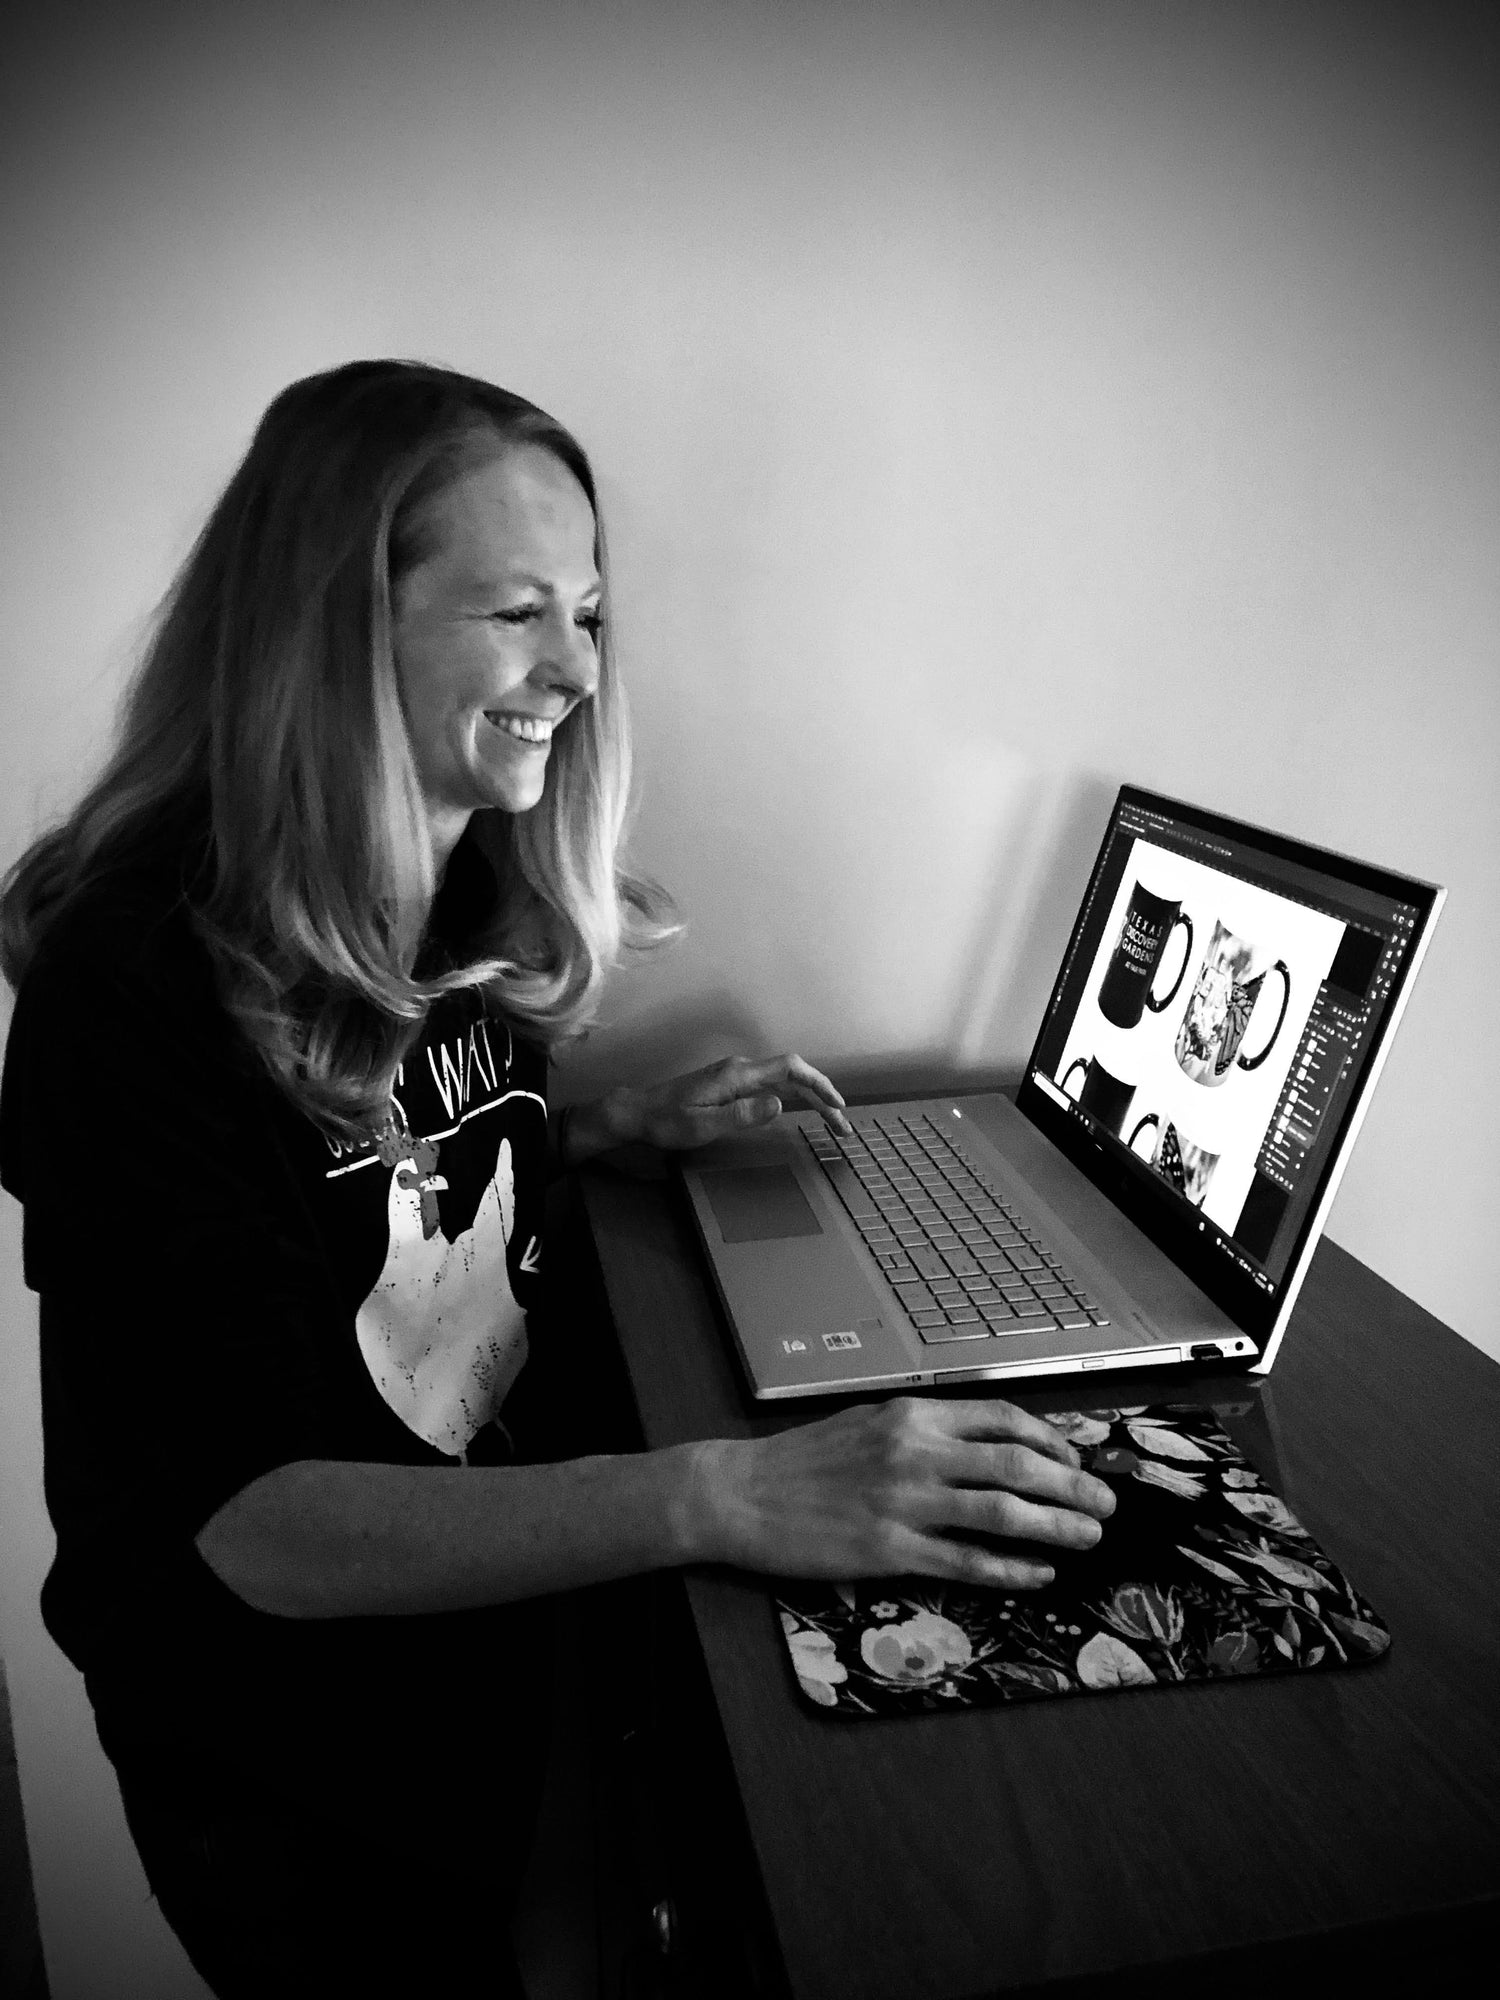 Smiling woman at desk with laptop working on designing mugs. 